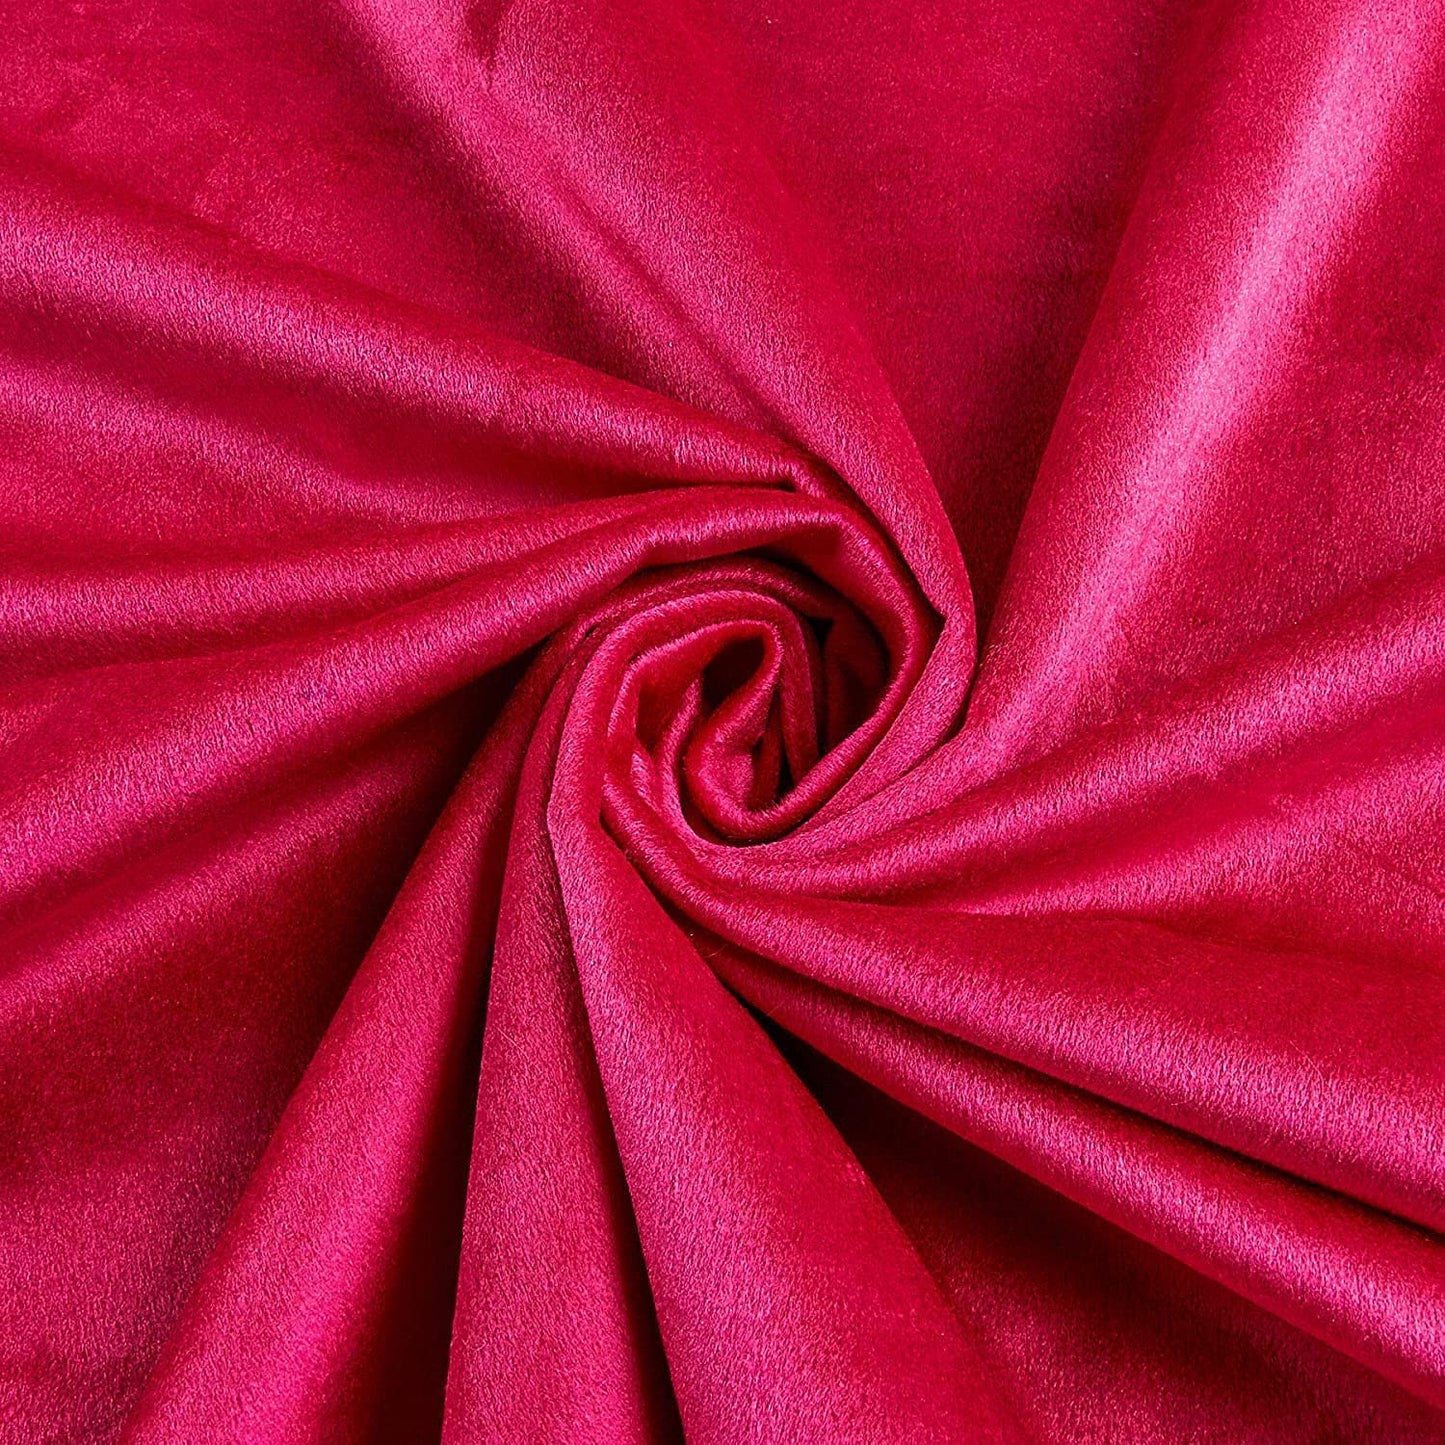 Upholstery Royal Velvet Fabric, 100% Polyester Upholstery Fabric (1 Yard, Fuchsia)